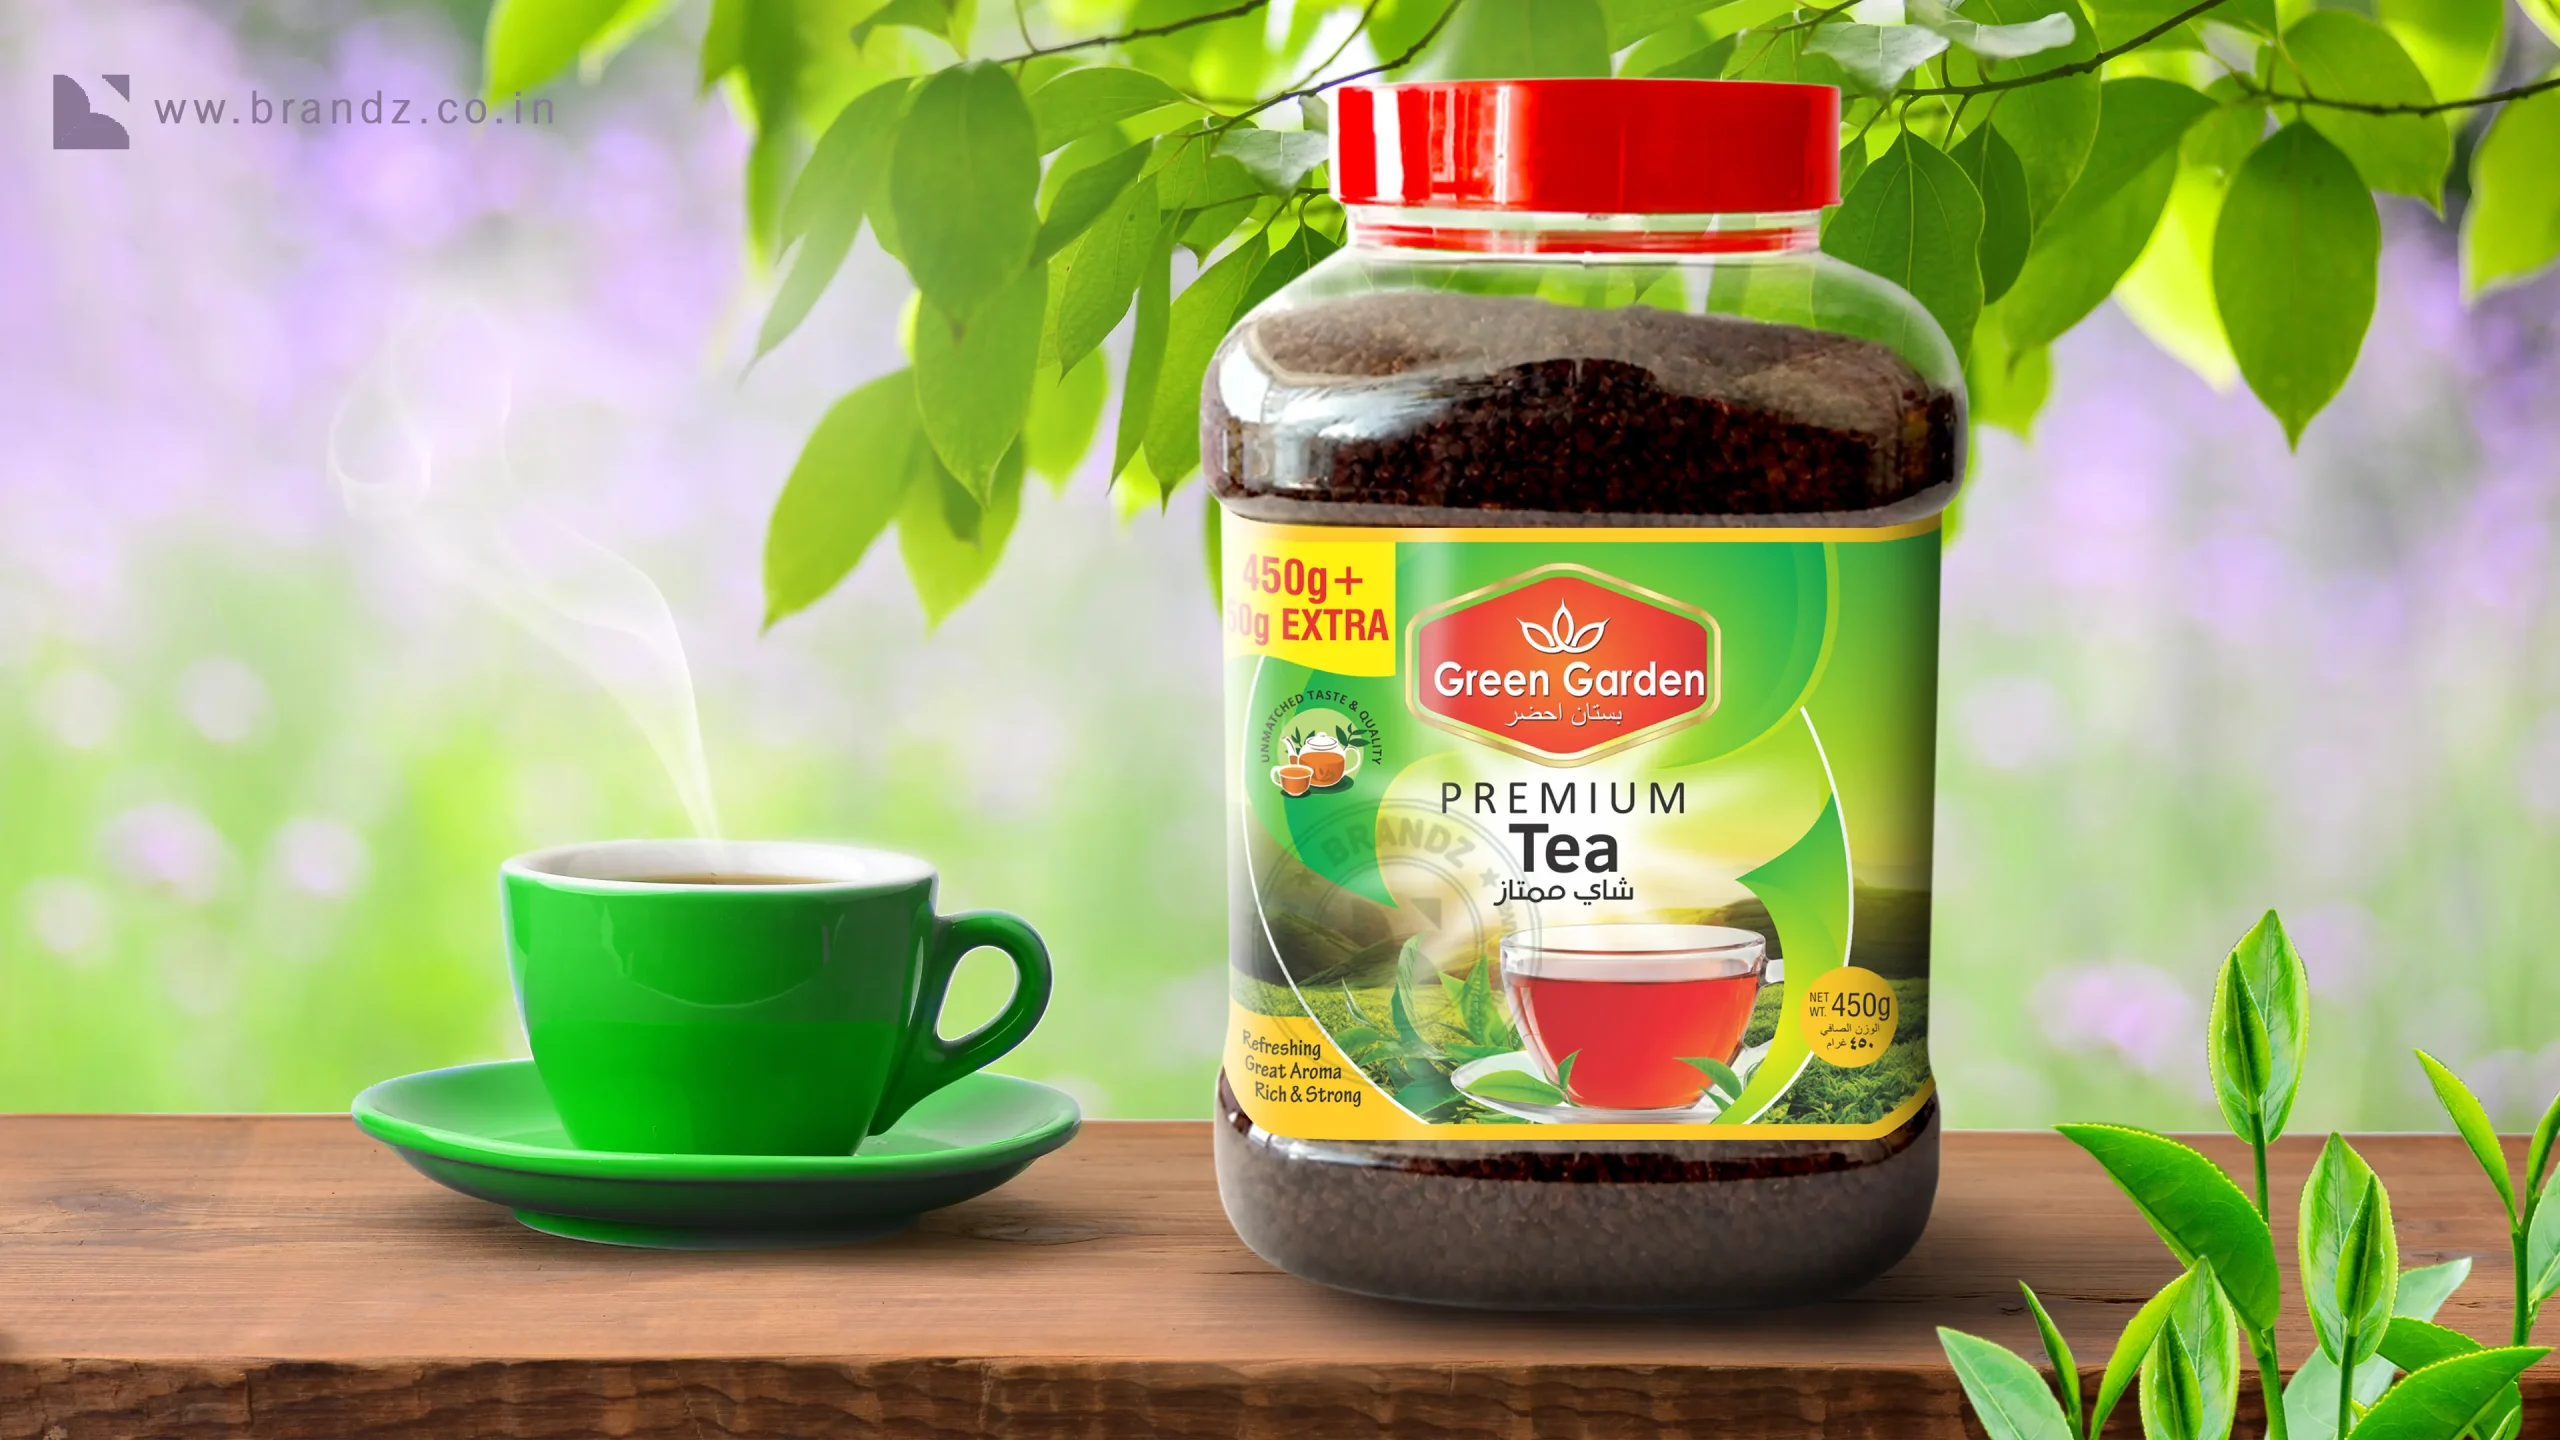 Green Garden Tea Label